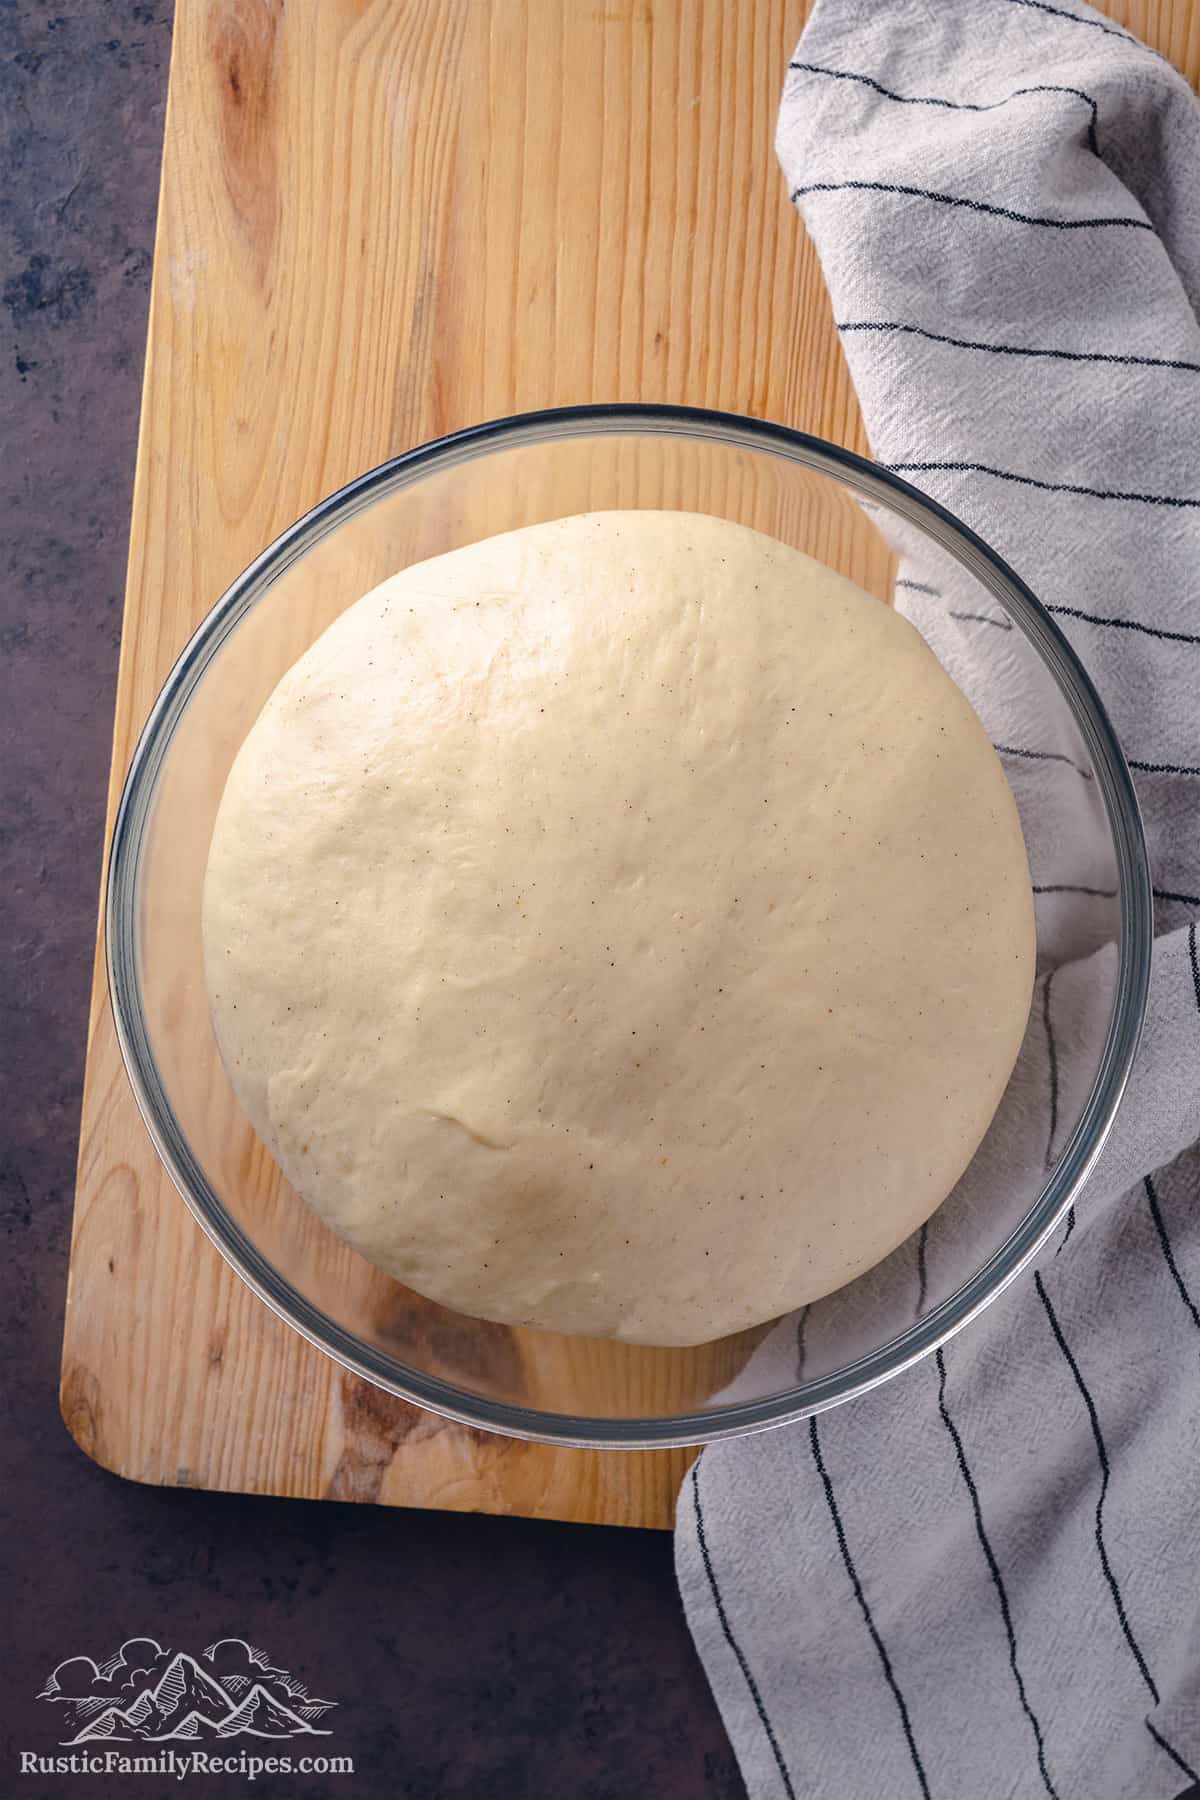 Risen concha dough in a glass bowl